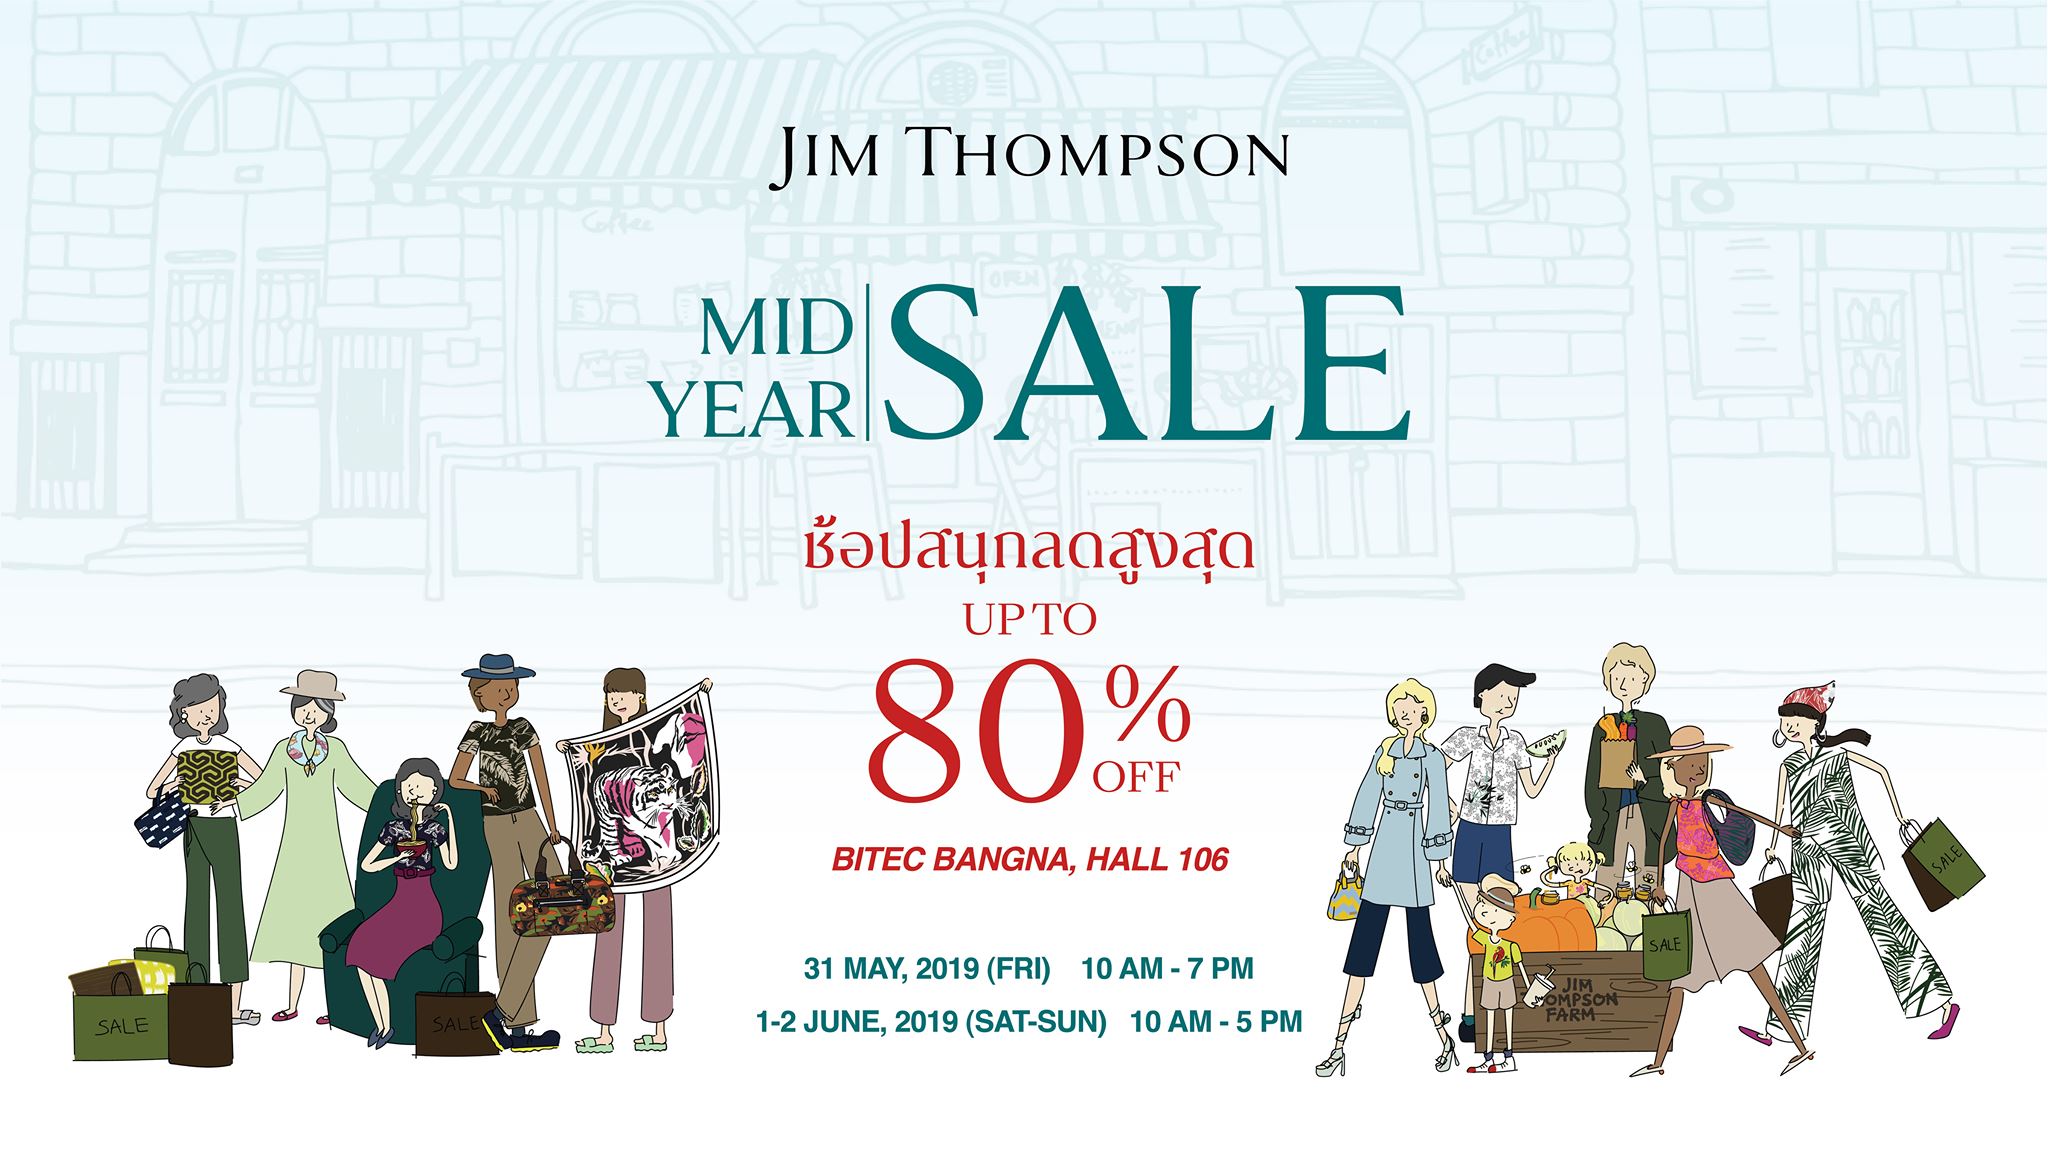 Jim Thompson Mid Year Sale 2019